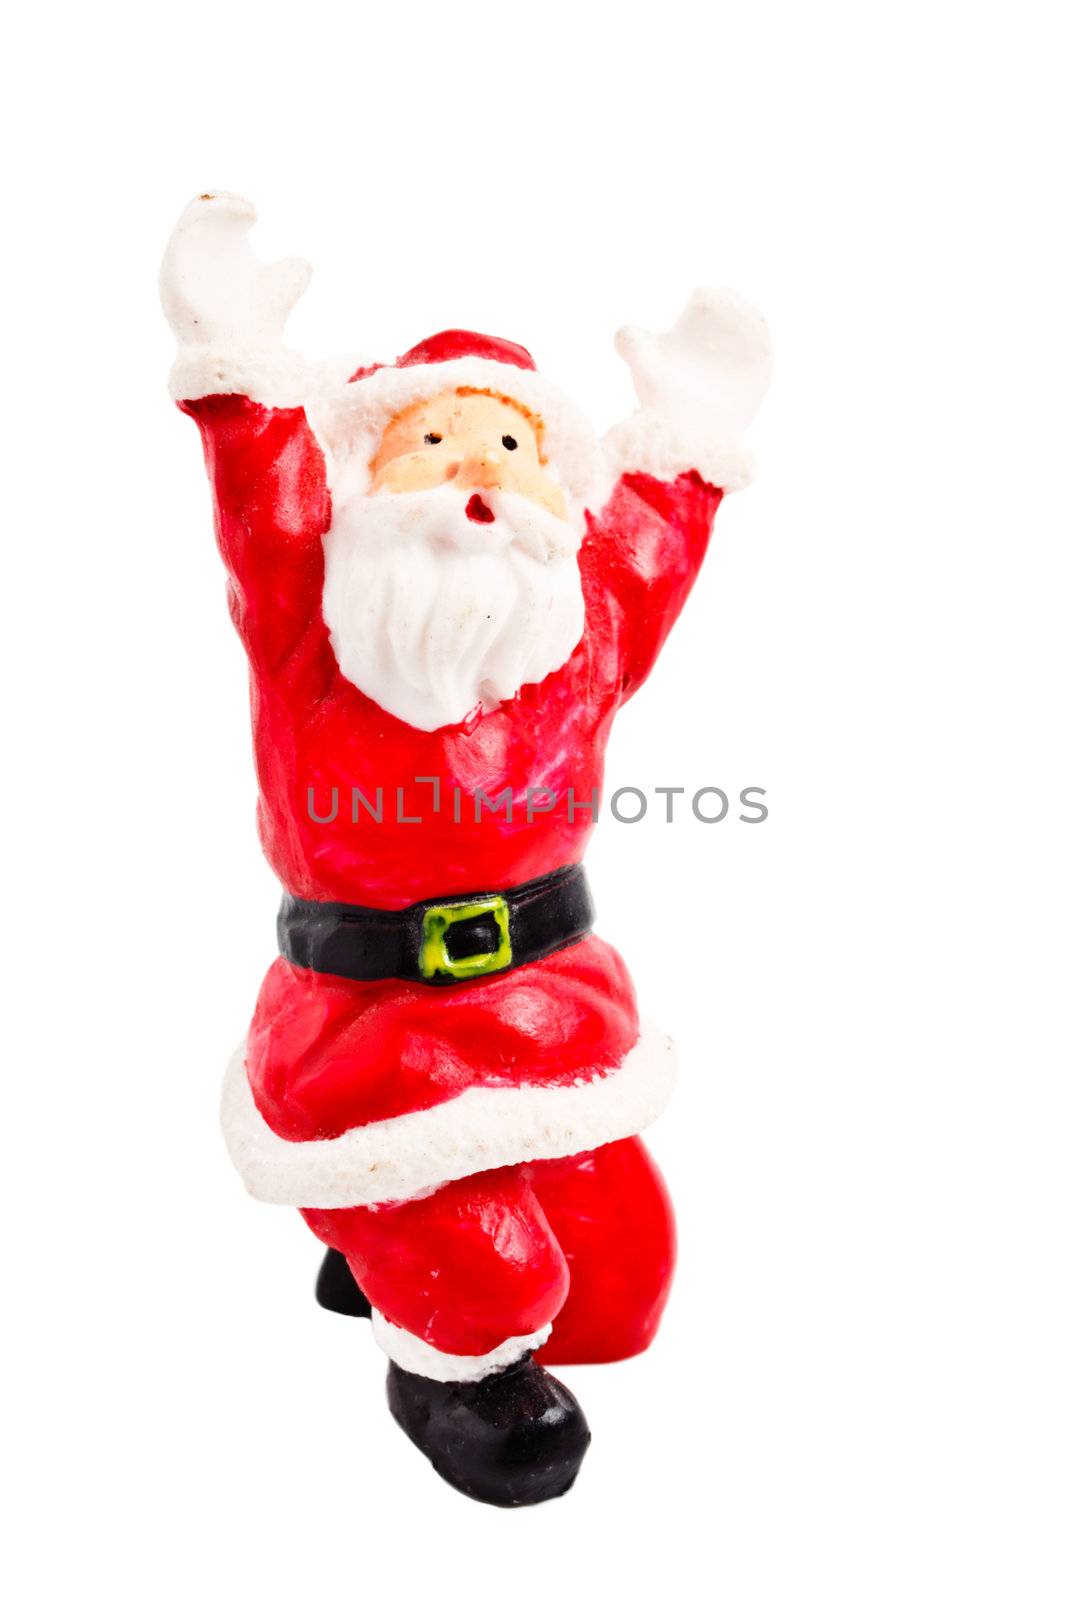 Santa Clause figurine isolated on white